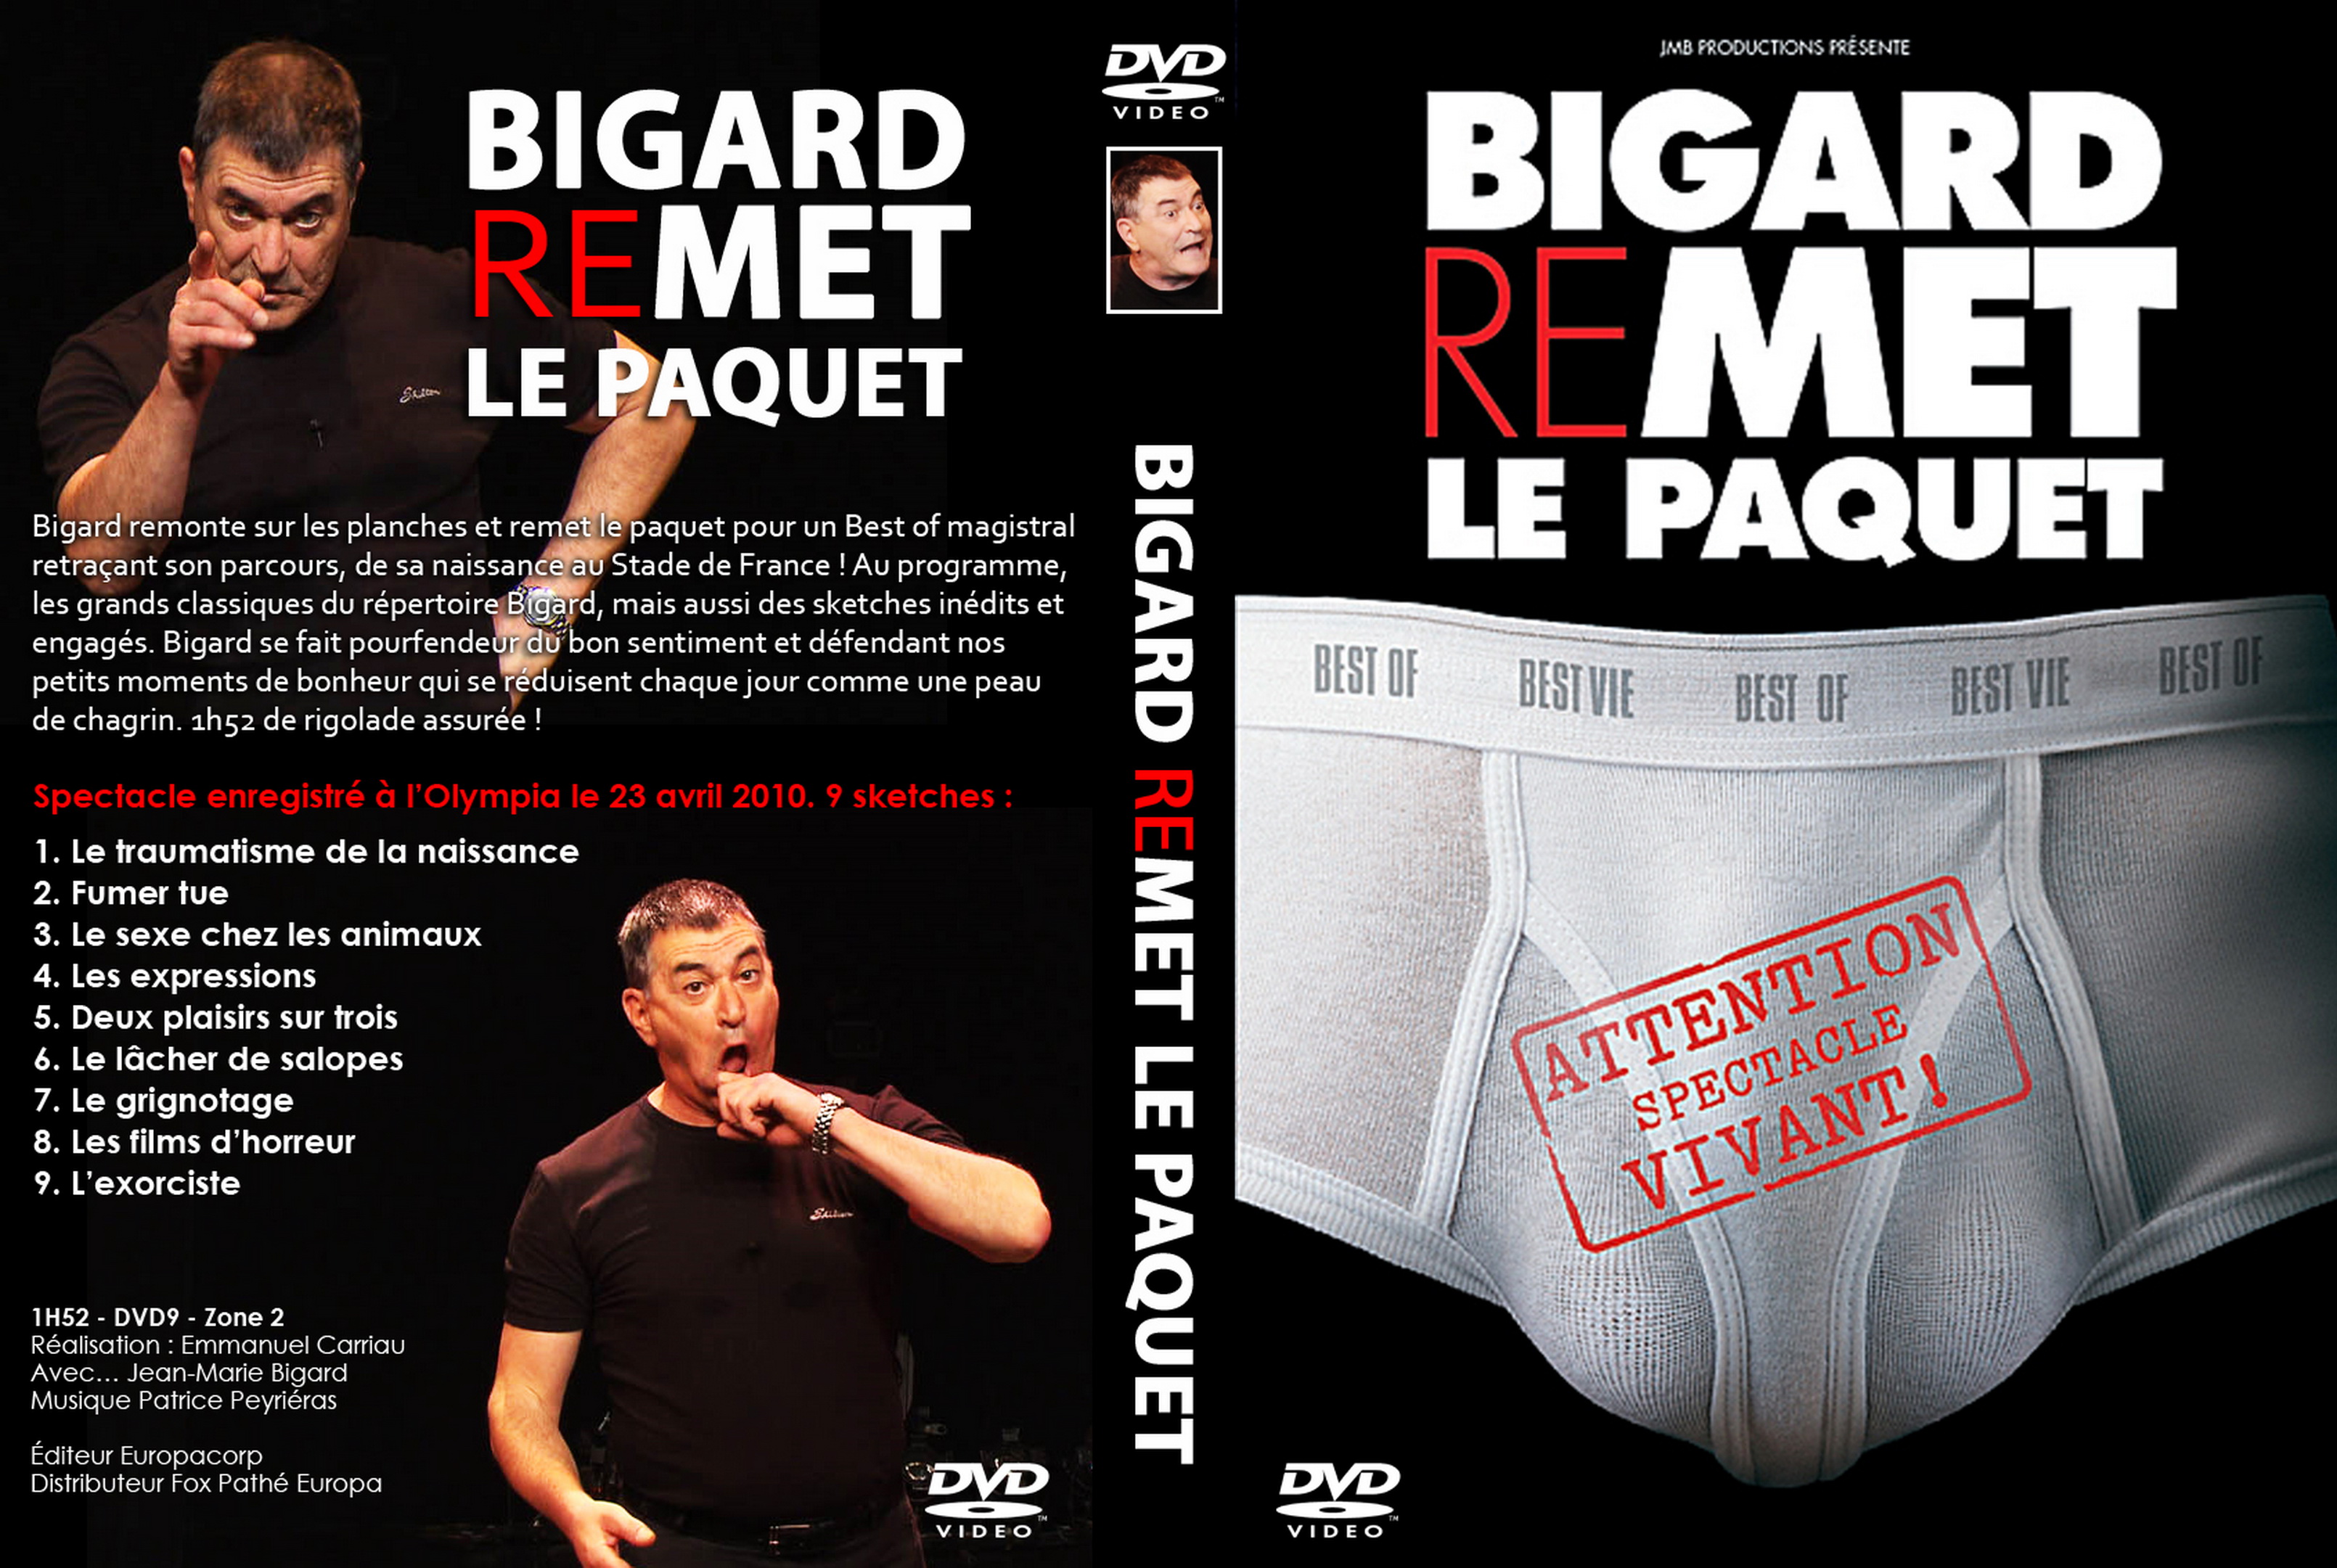 Jaquette DVD Bigard remet le paquet custom